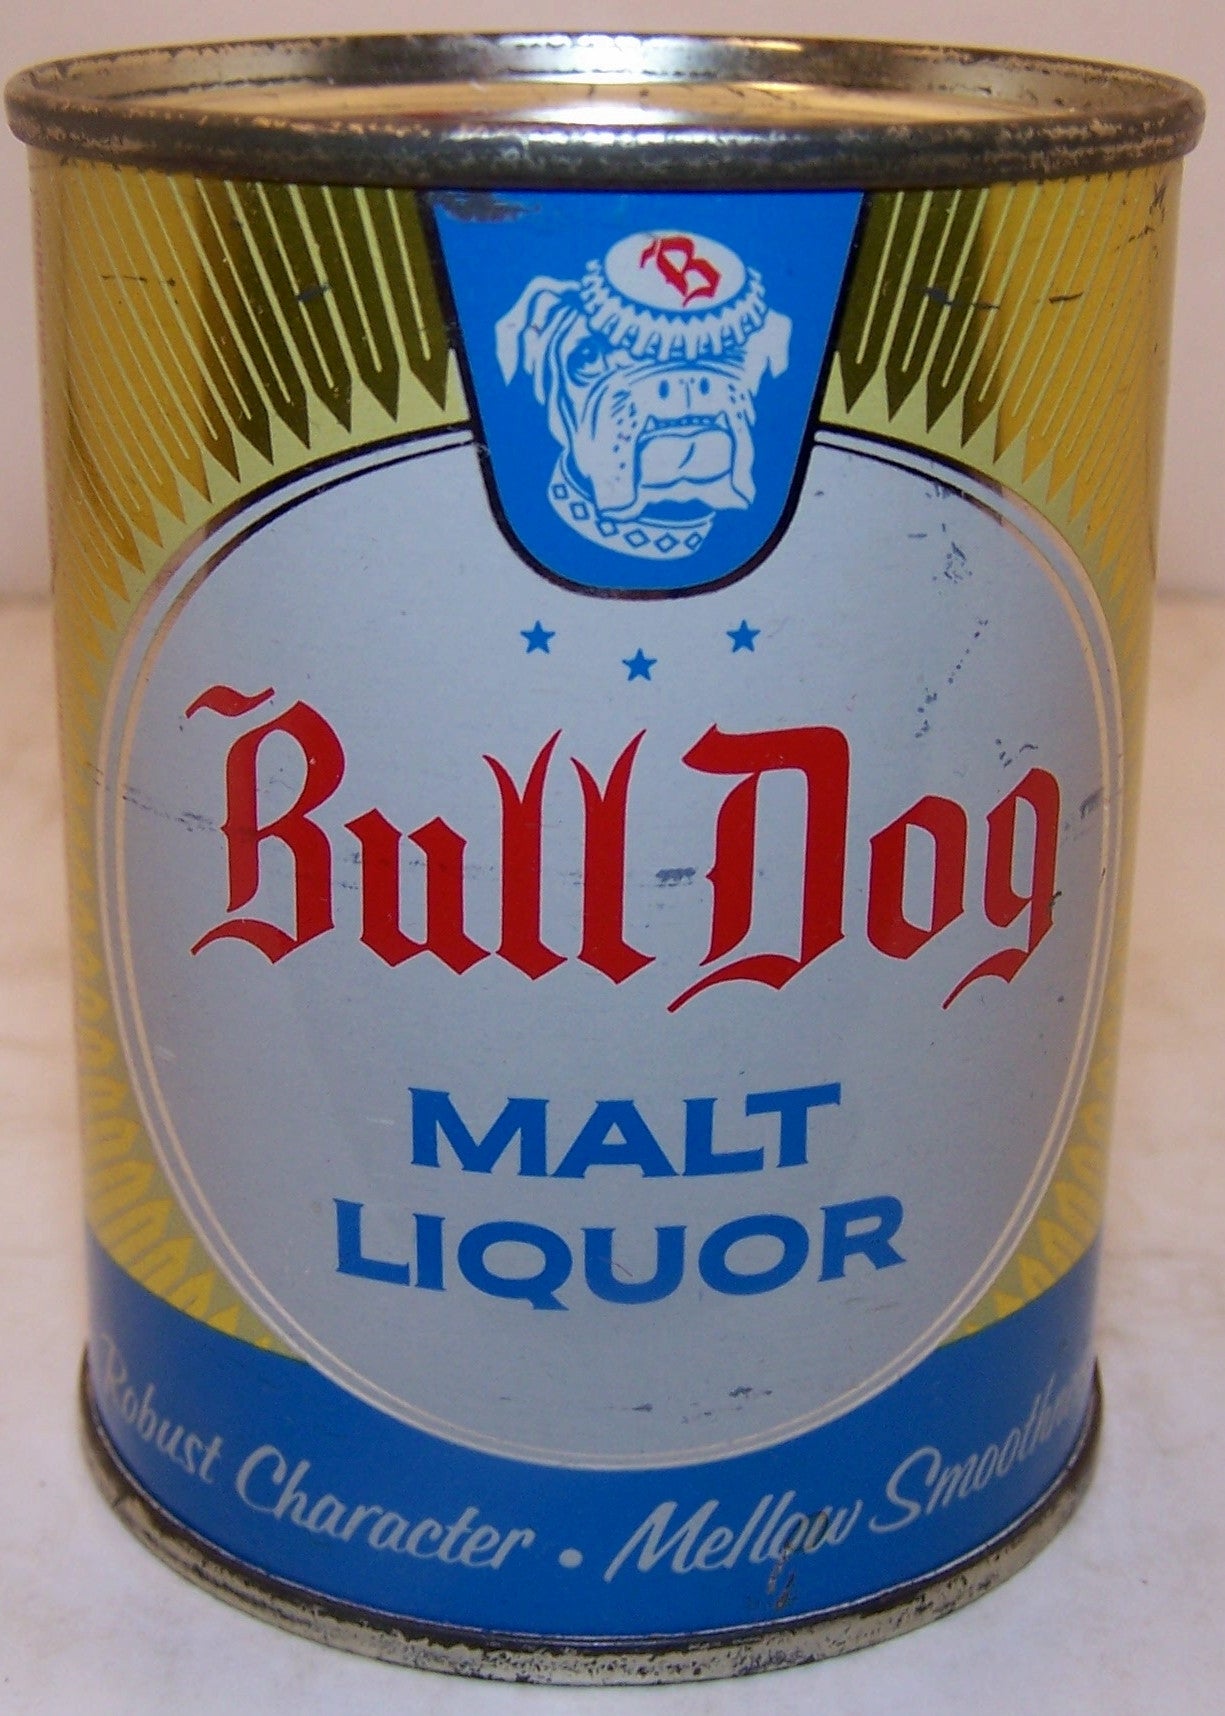 Bull Dog Malt Liquor, USBC 239-9 Grade 1/1- Sold on 04/14/17